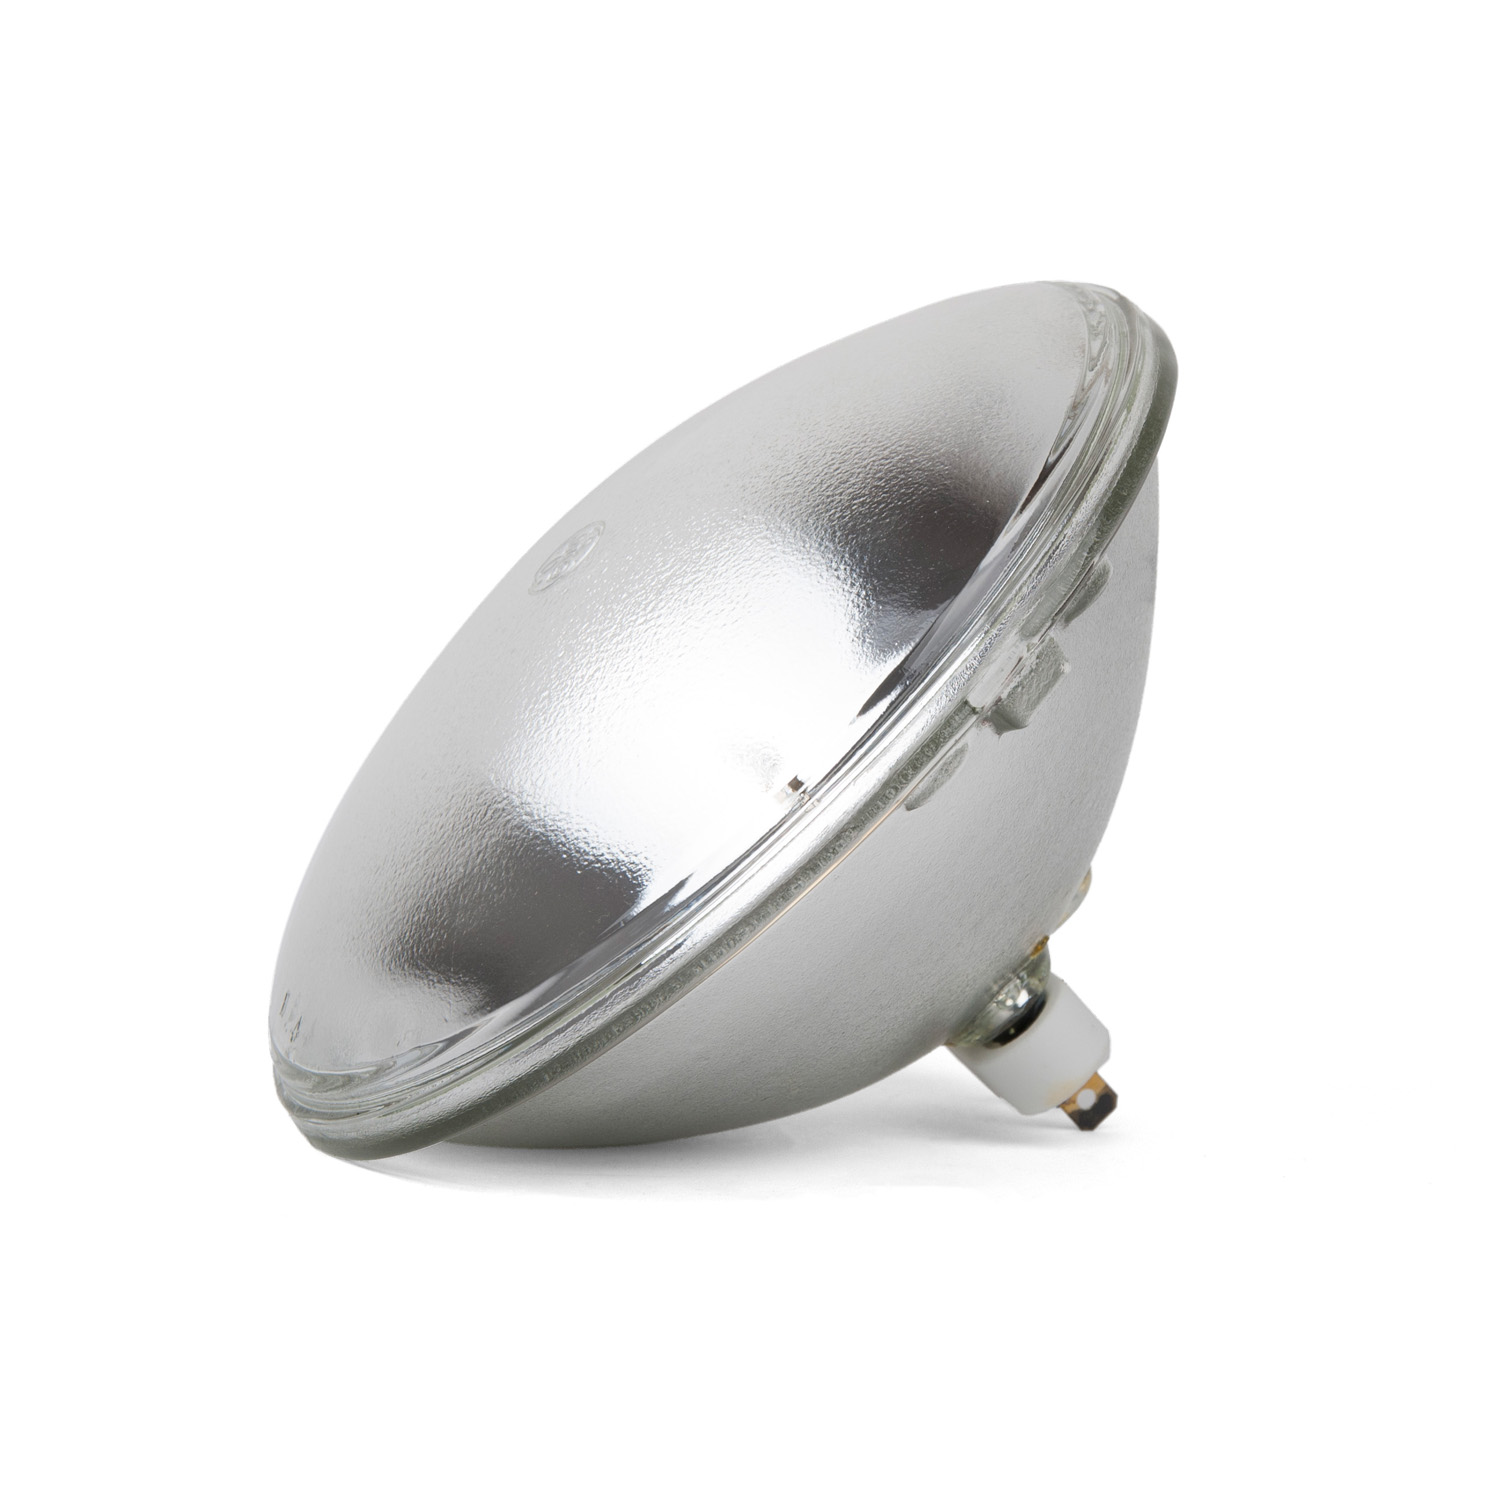 HGS230300R Spare halogen lamp, 230V 300W Reflector